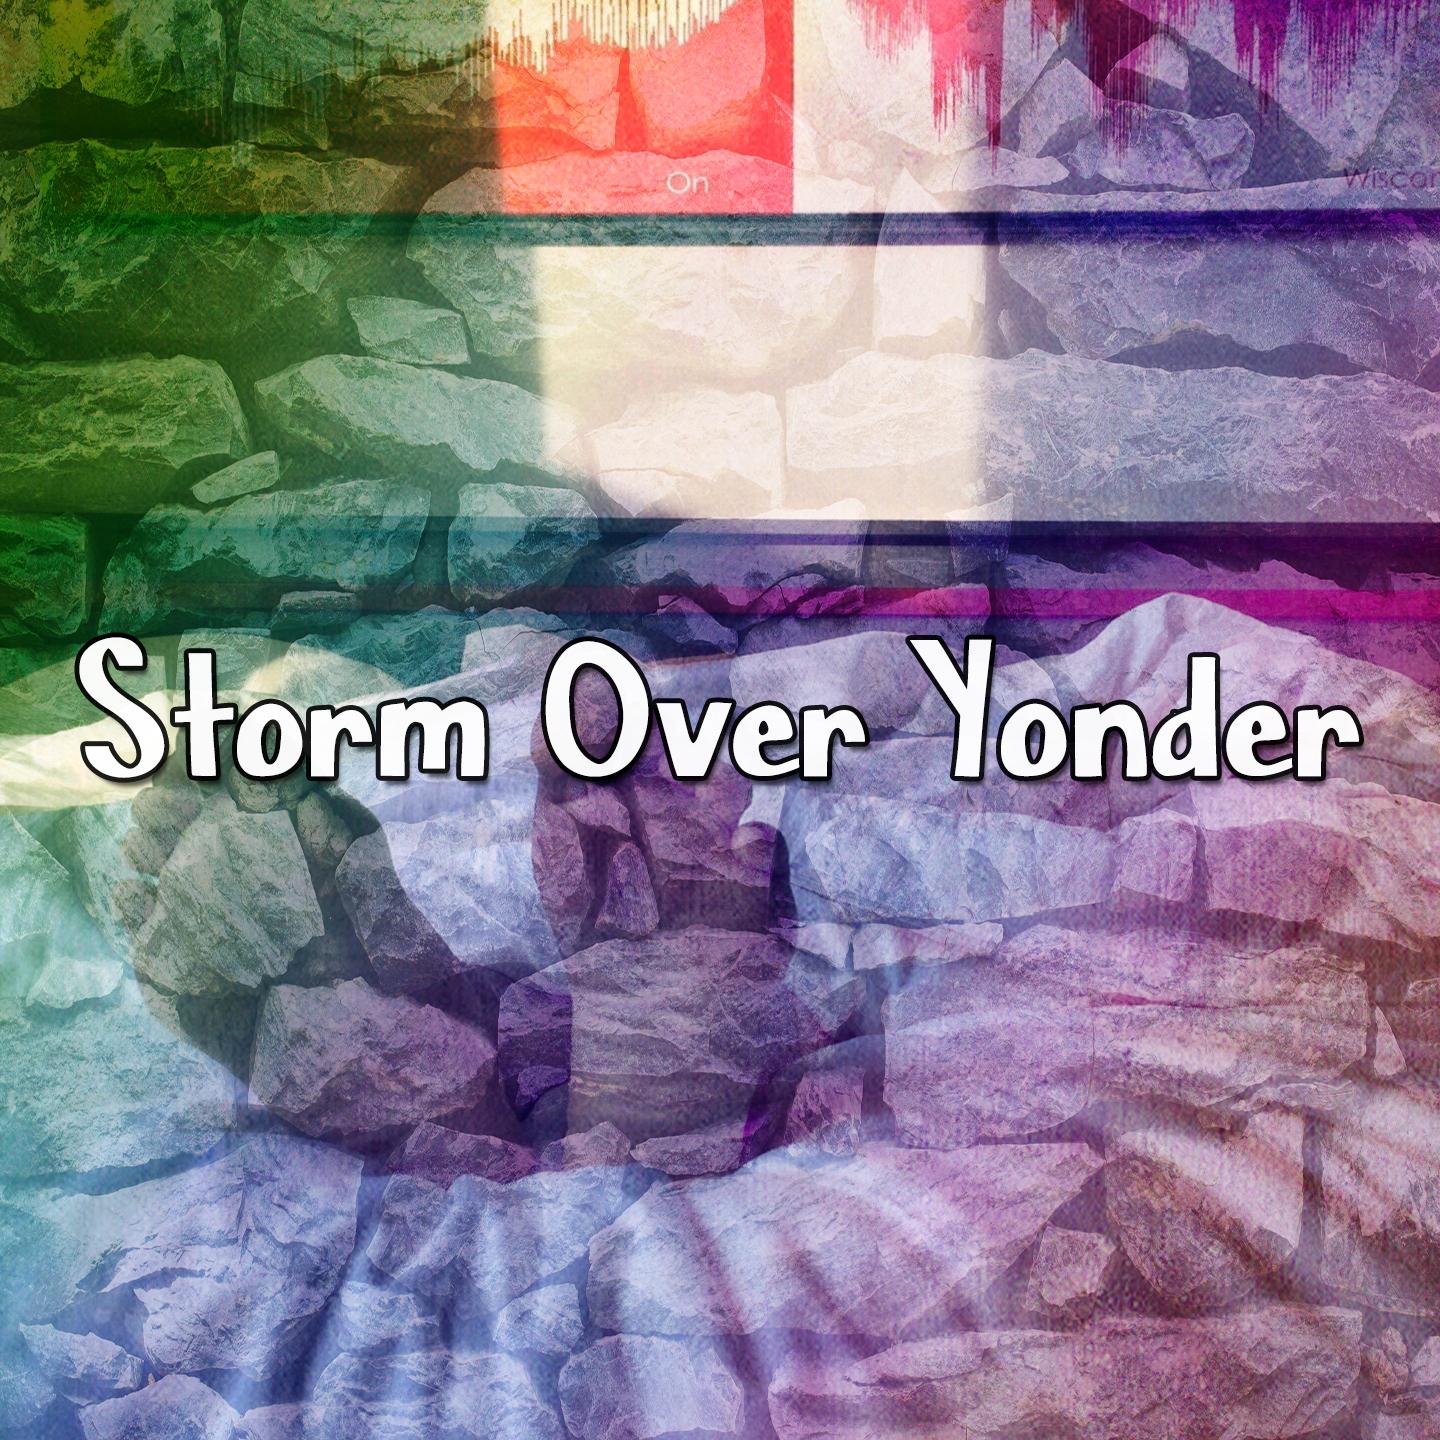 Storm Over Yonder